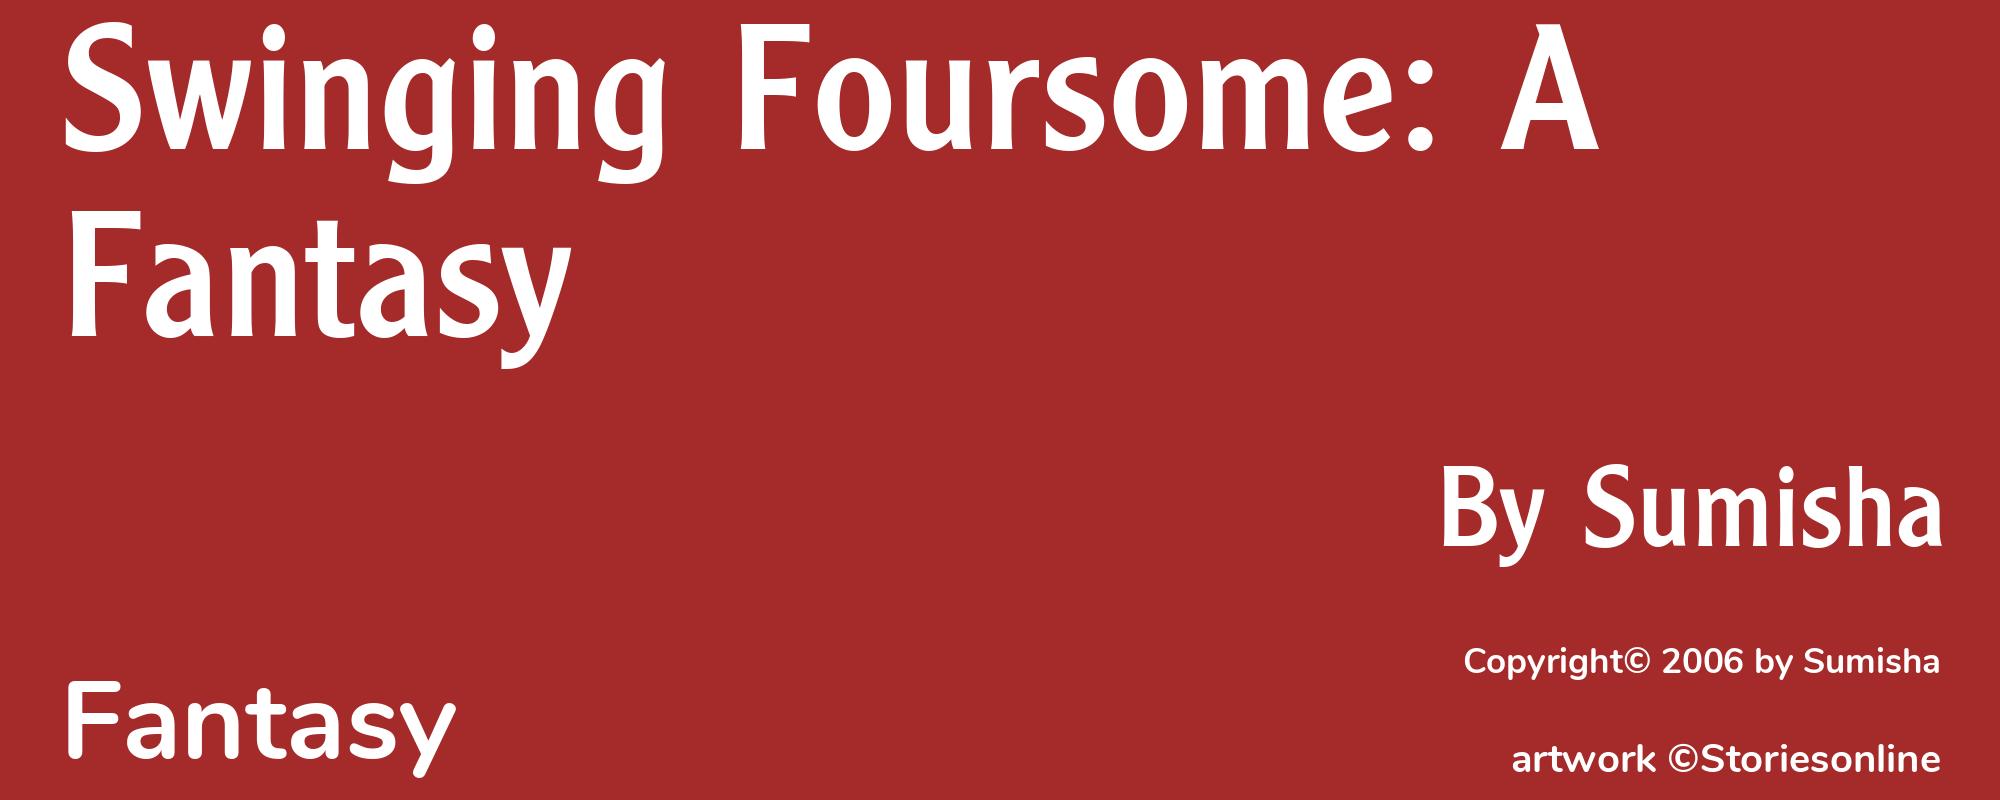 Swinging Foursome: A Fantasy - Cover